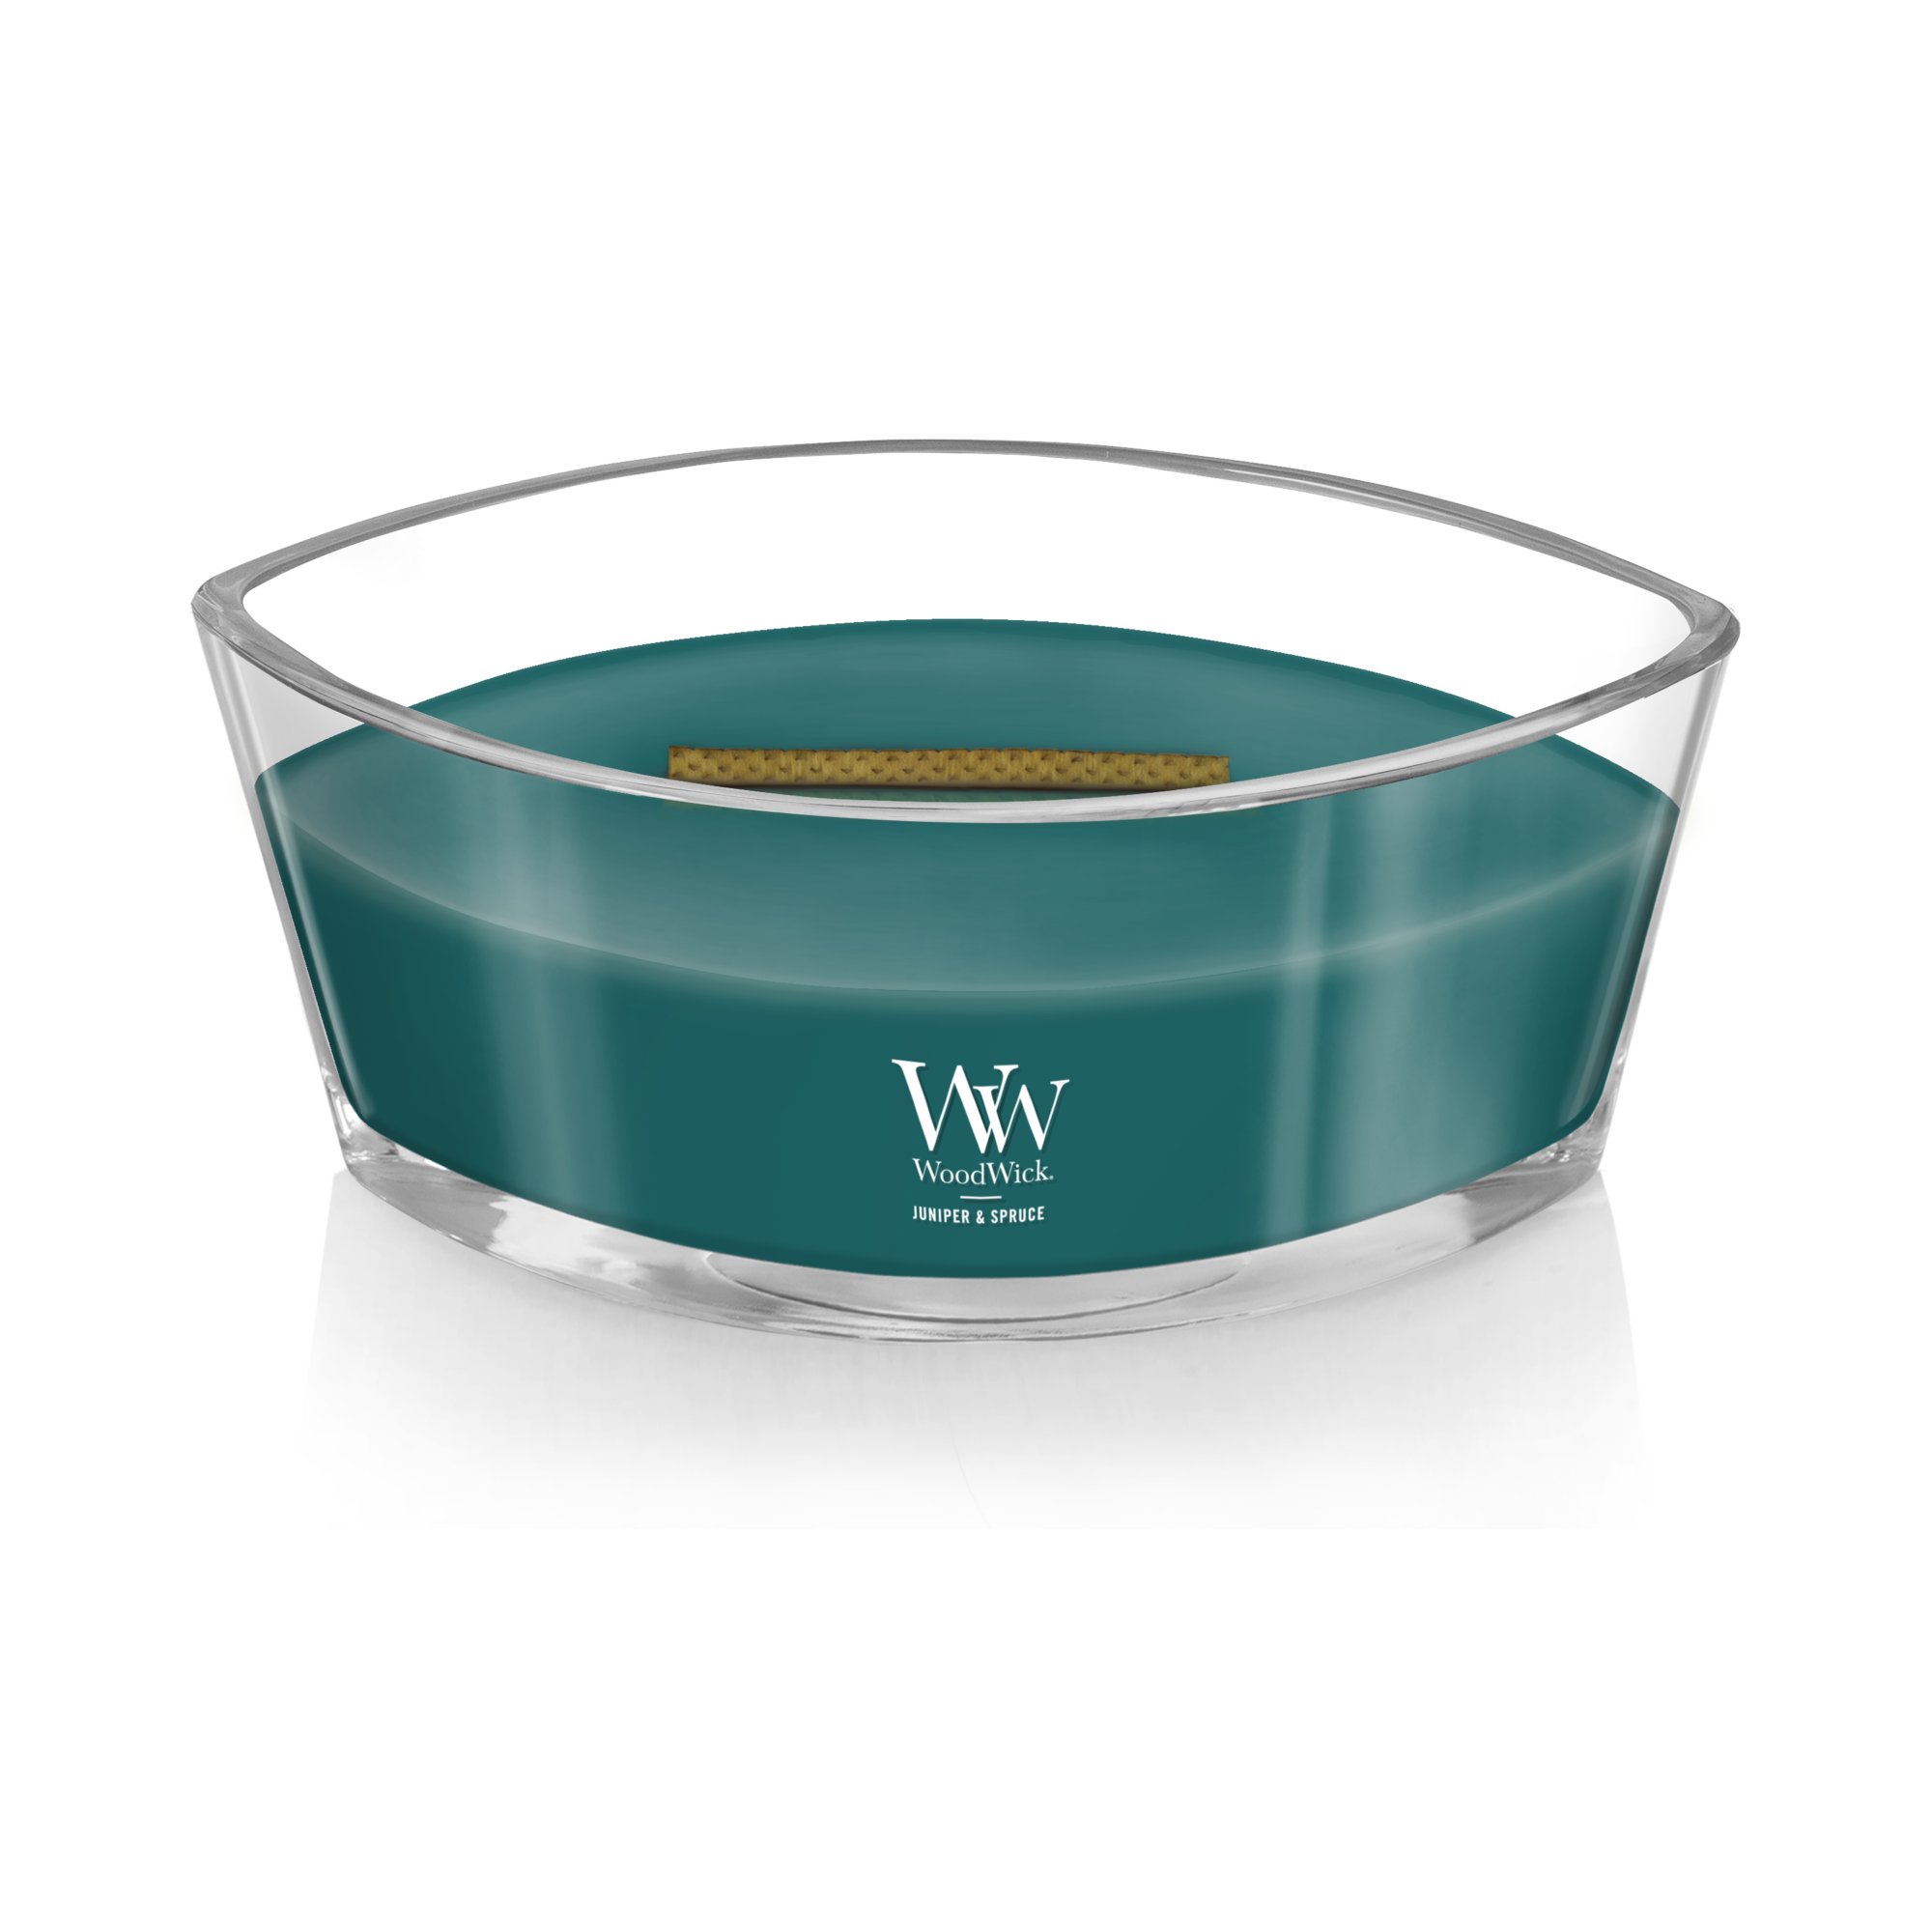 Woodwick Juniper & Spruce Highly Fragranced Wax Melt 3 oz - Lot of 3  192833188595 on eBid United States